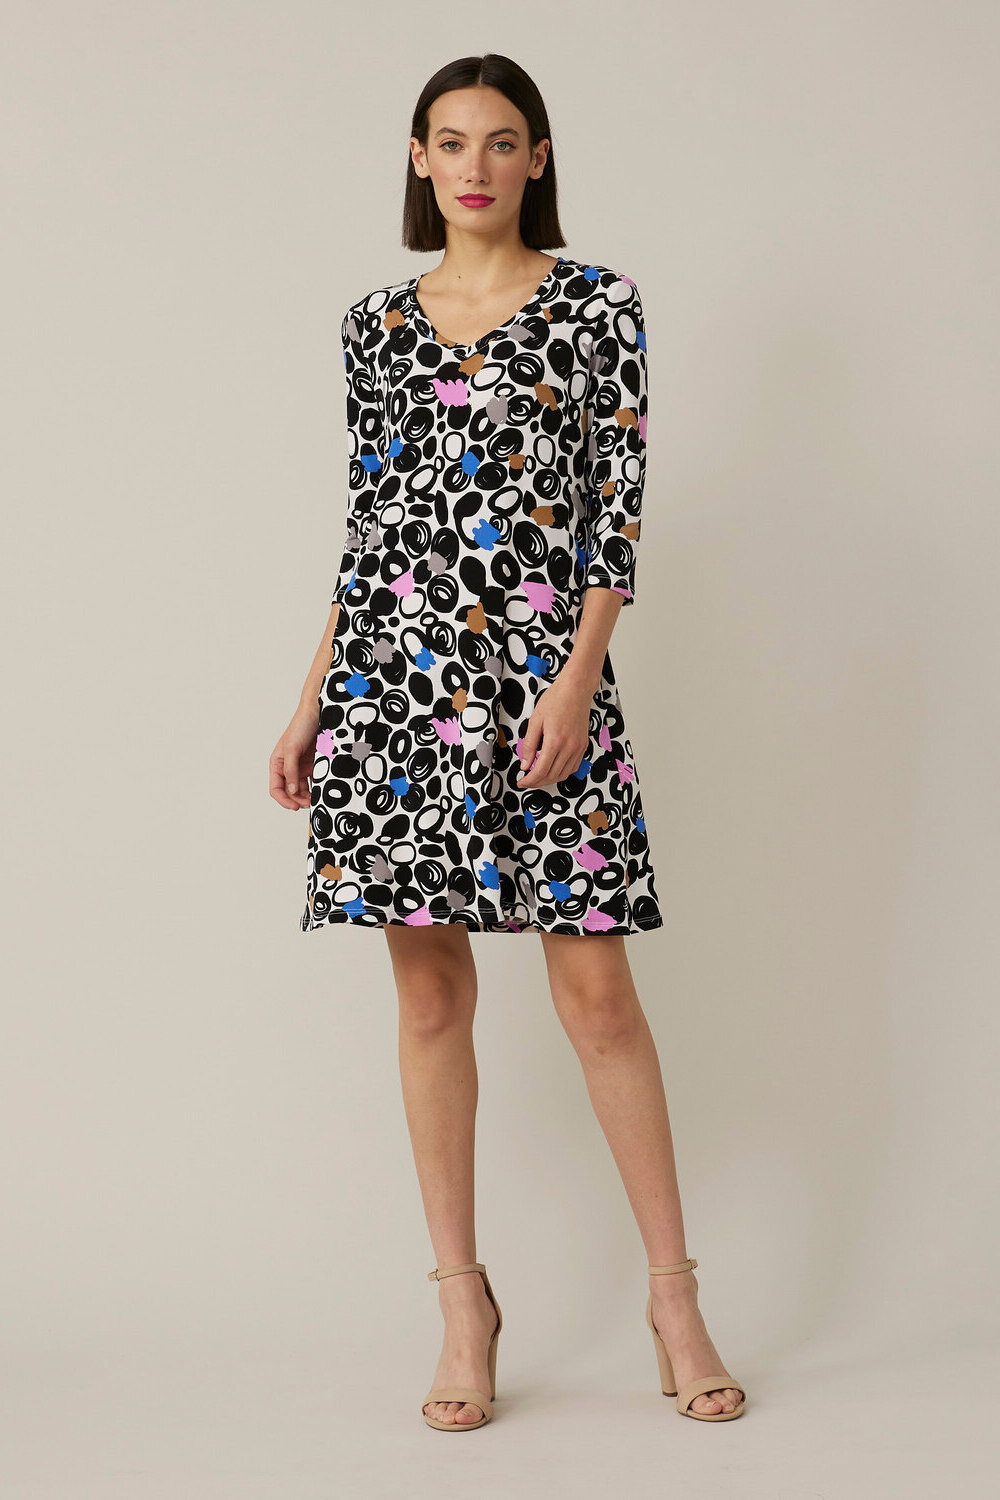 Joseph Ribkoff Printed Dress Style 221109. Vanilla/multi